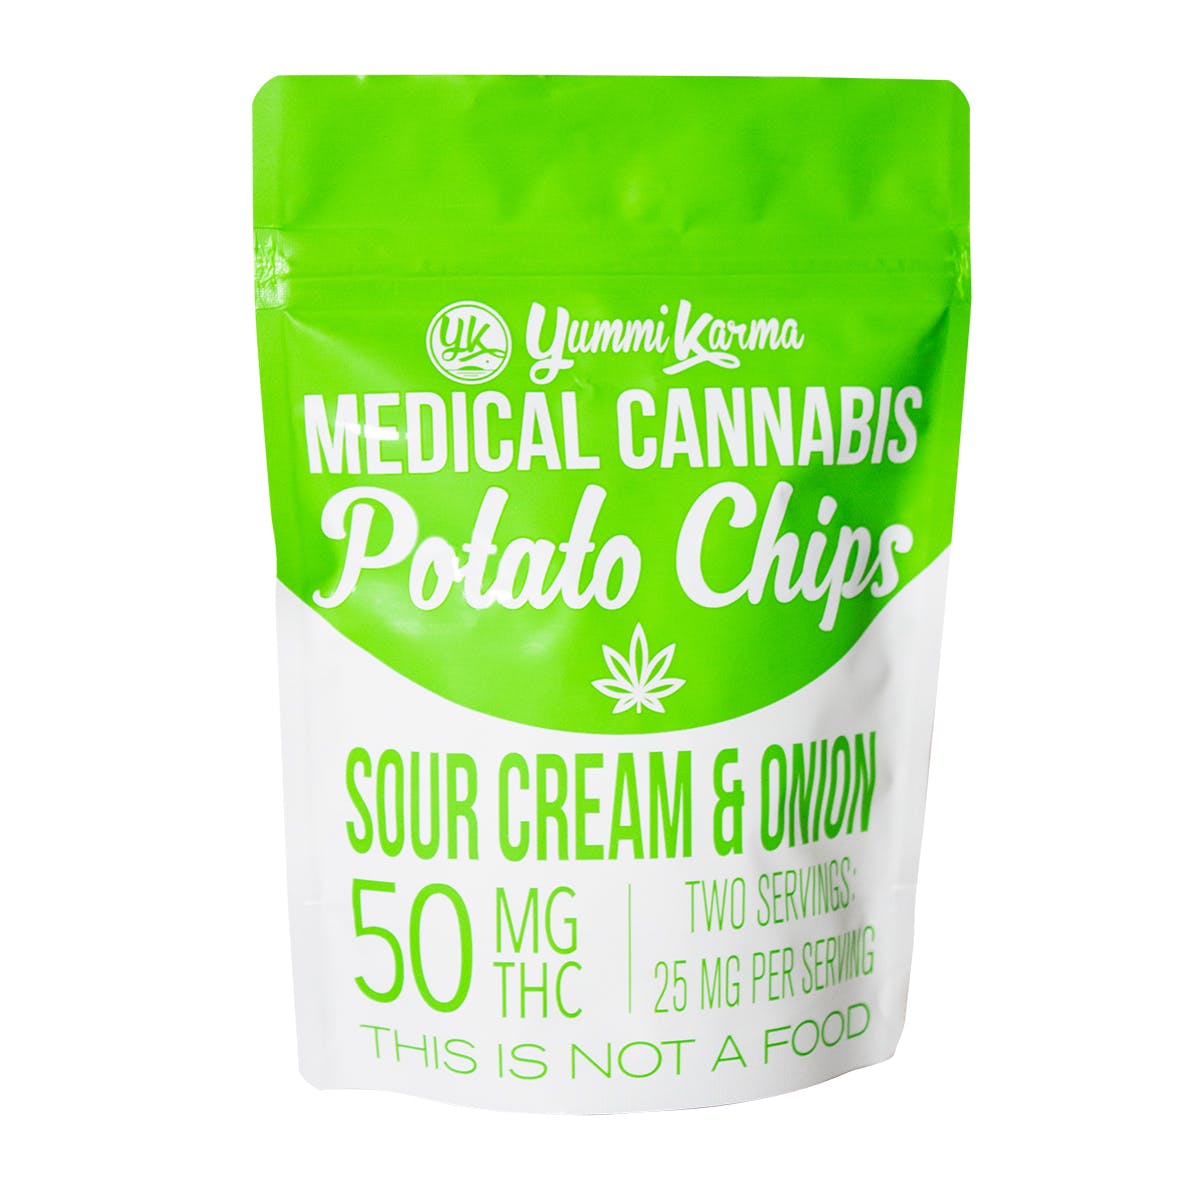 marijuana-dispensaries-natural-healing-remedies-in-bakersfield-medical-cannabis-potato-chips-2c-sour-cream-a-onion